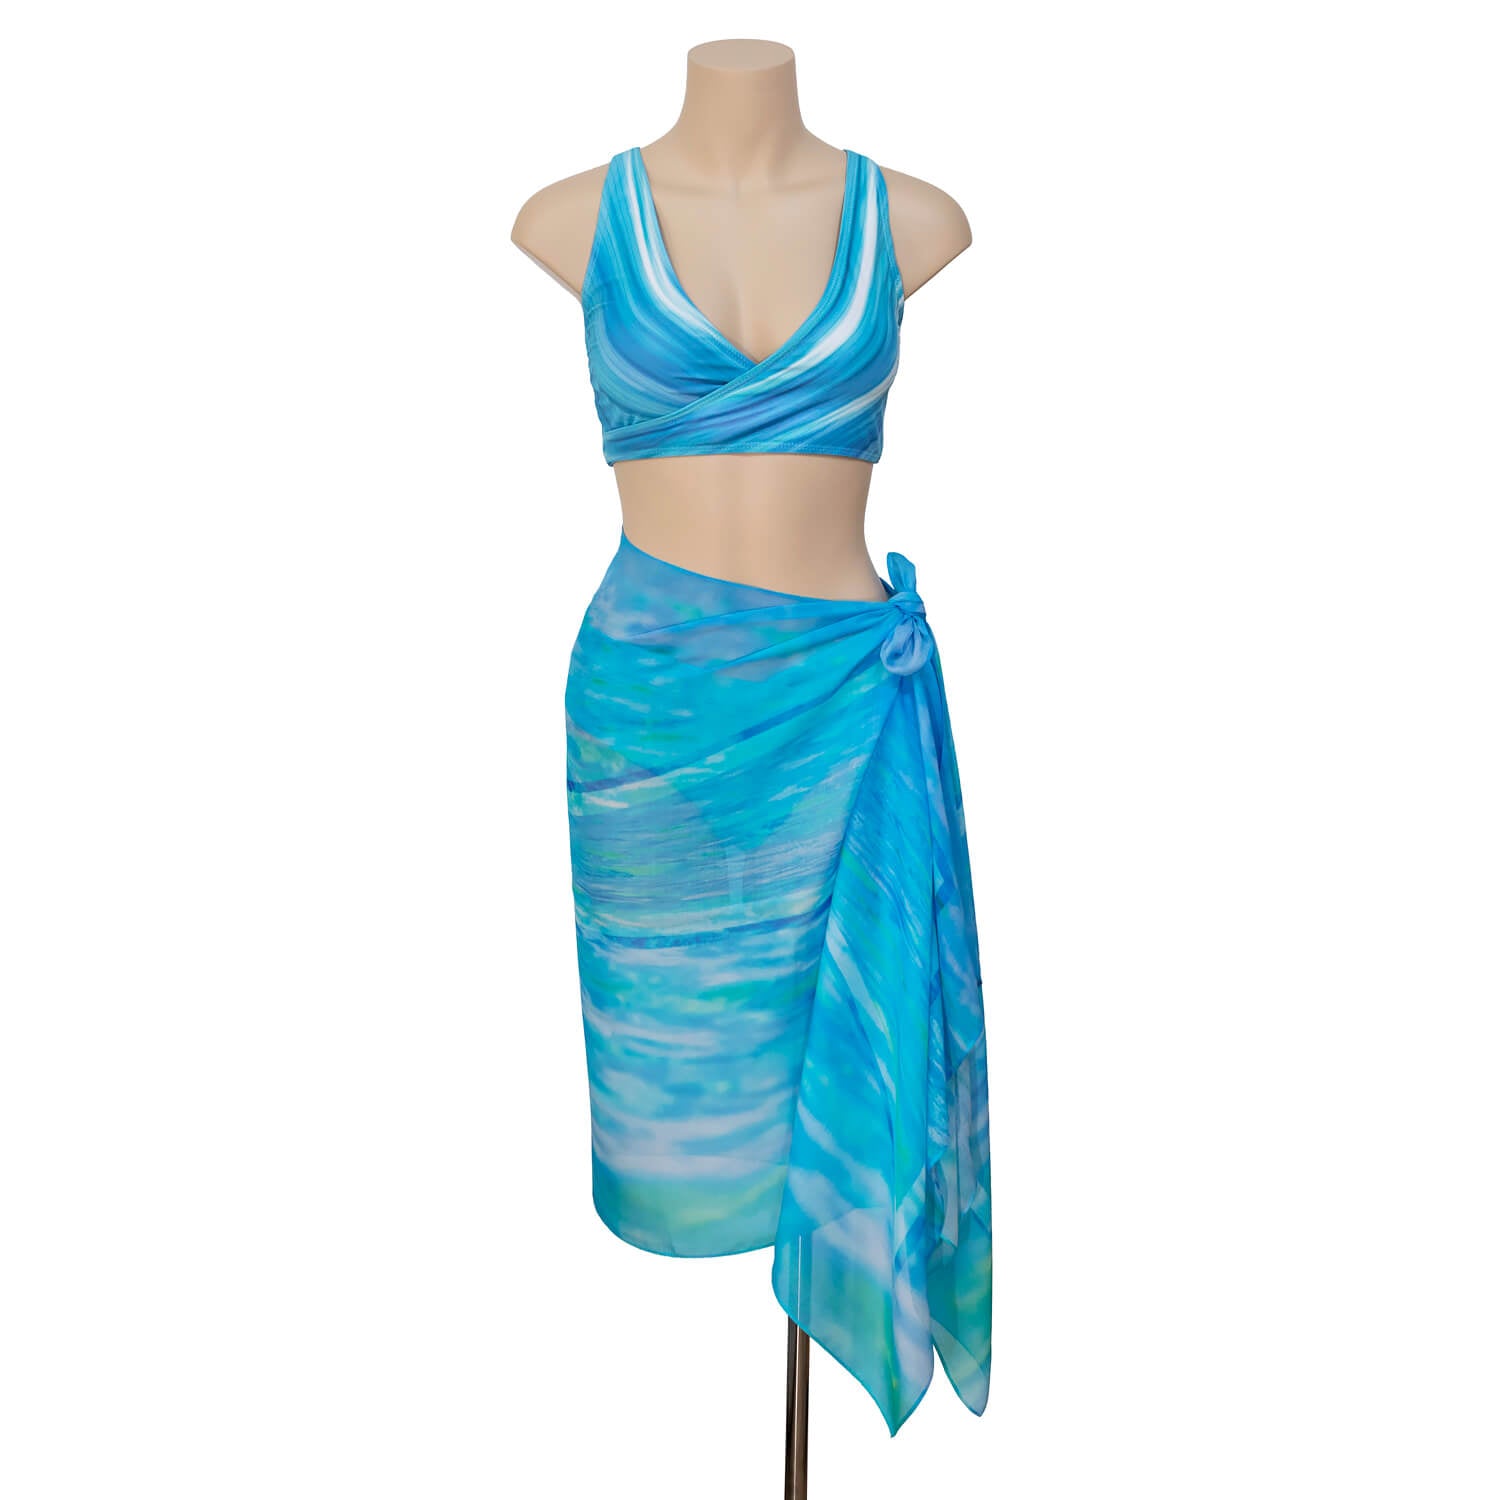 florida aqua blue scarf by seahorse silks worn as sarong